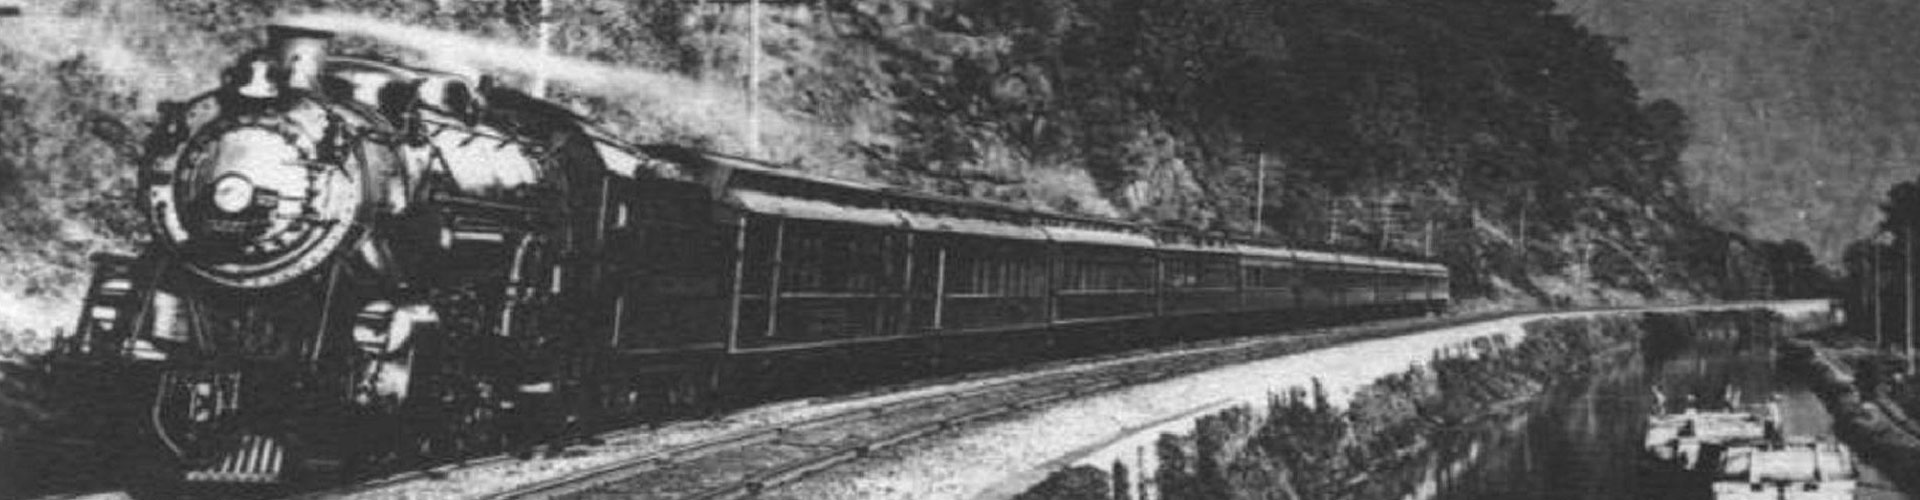 Canal&Train-1920-500